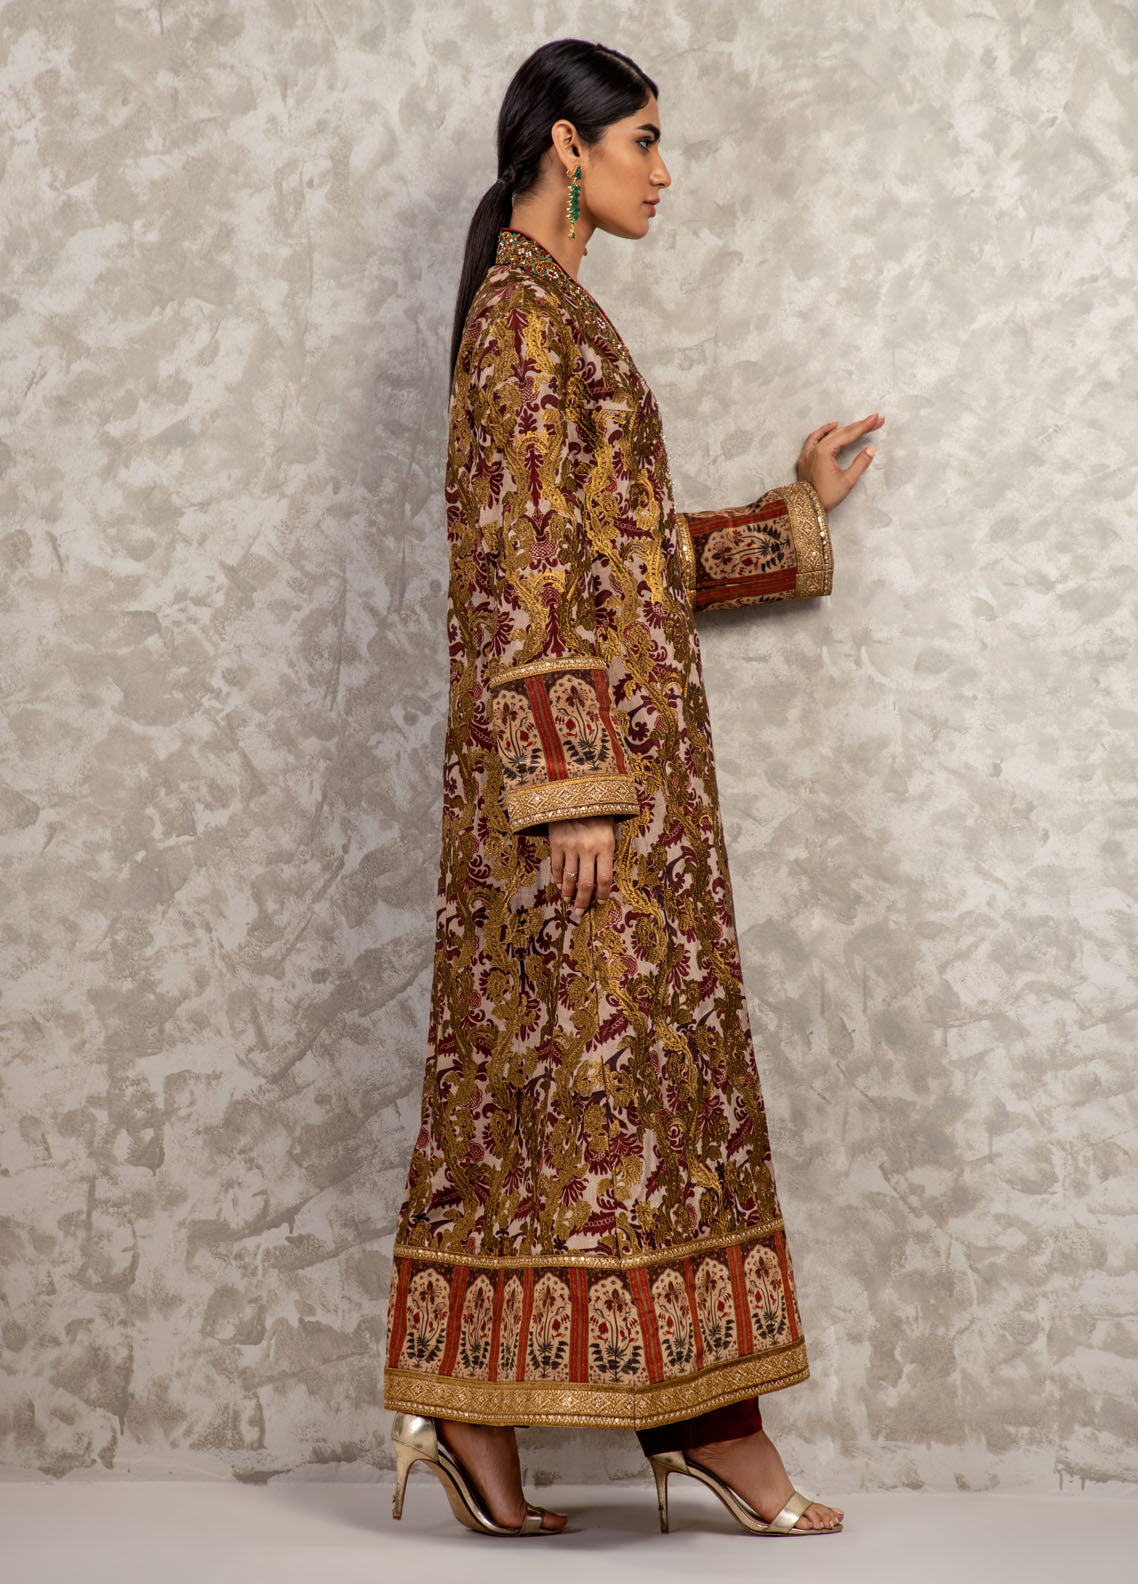 Shamaeel Ansari Luxury Pret Embroidered Silk Shirt AM-18